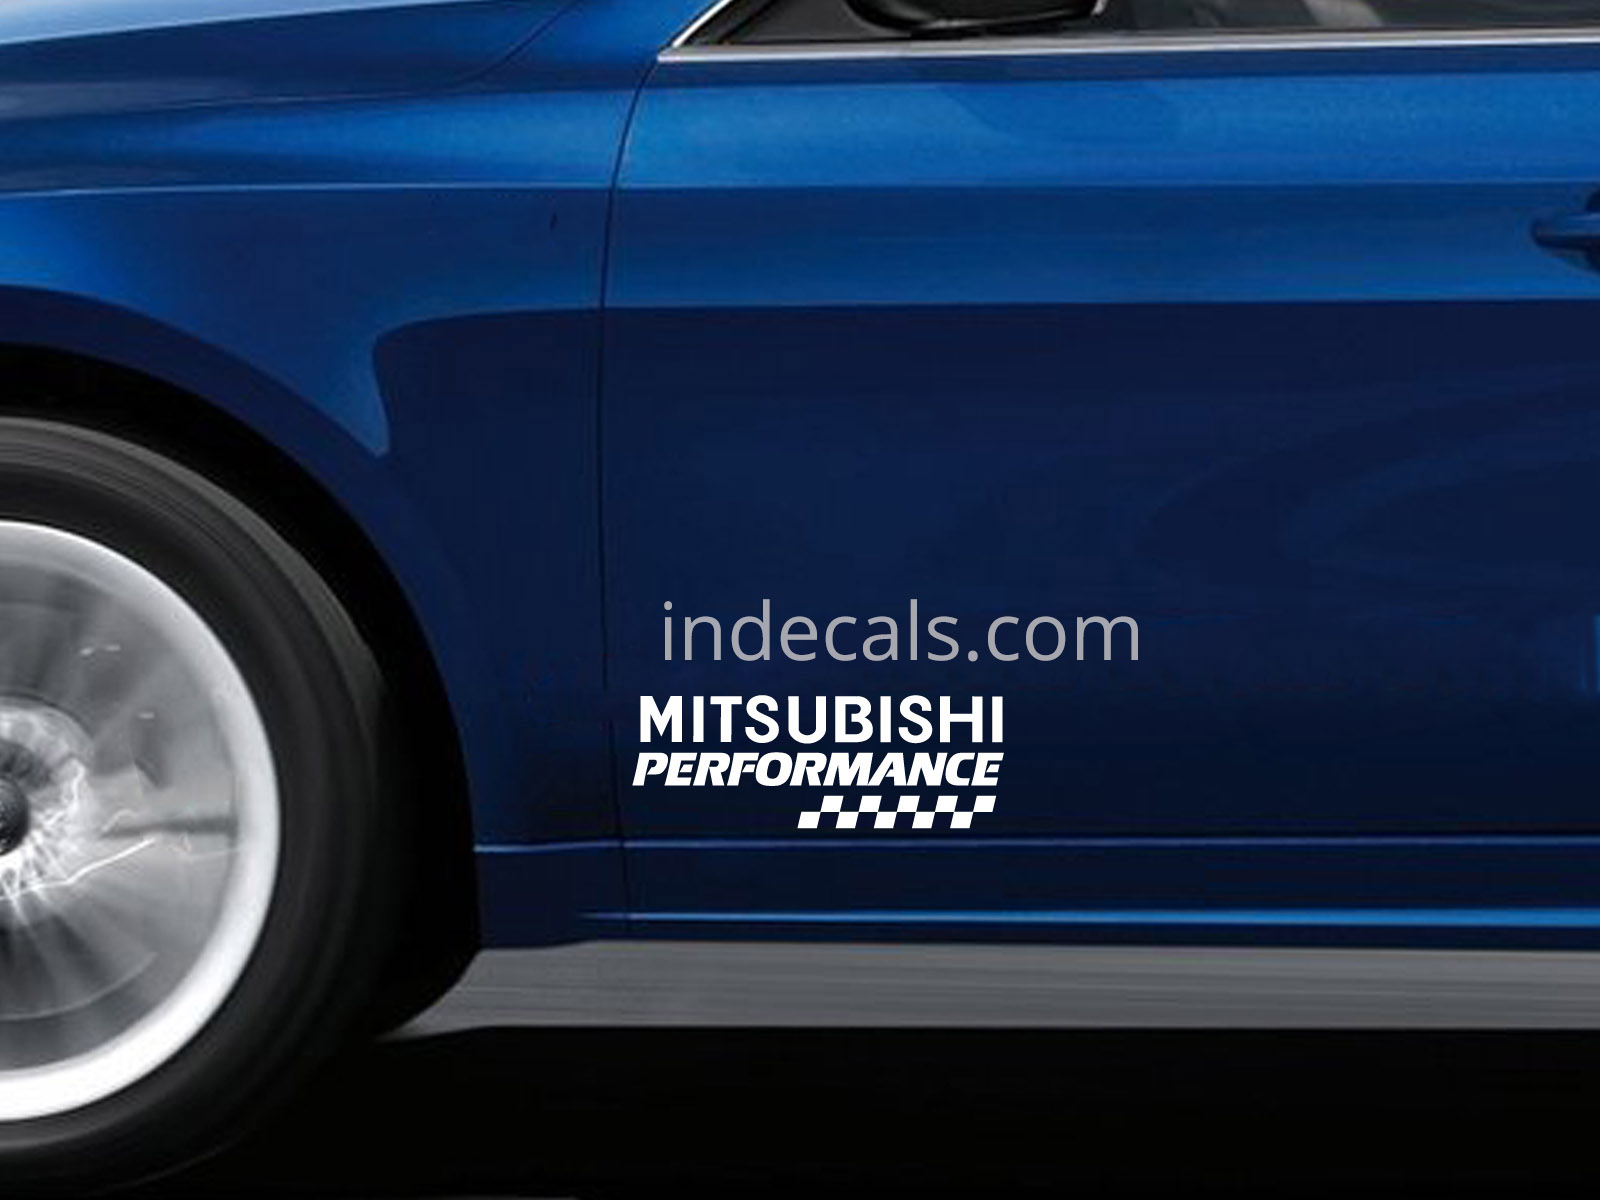 2 x Mitsubishi Performance Stickers for Doors - White